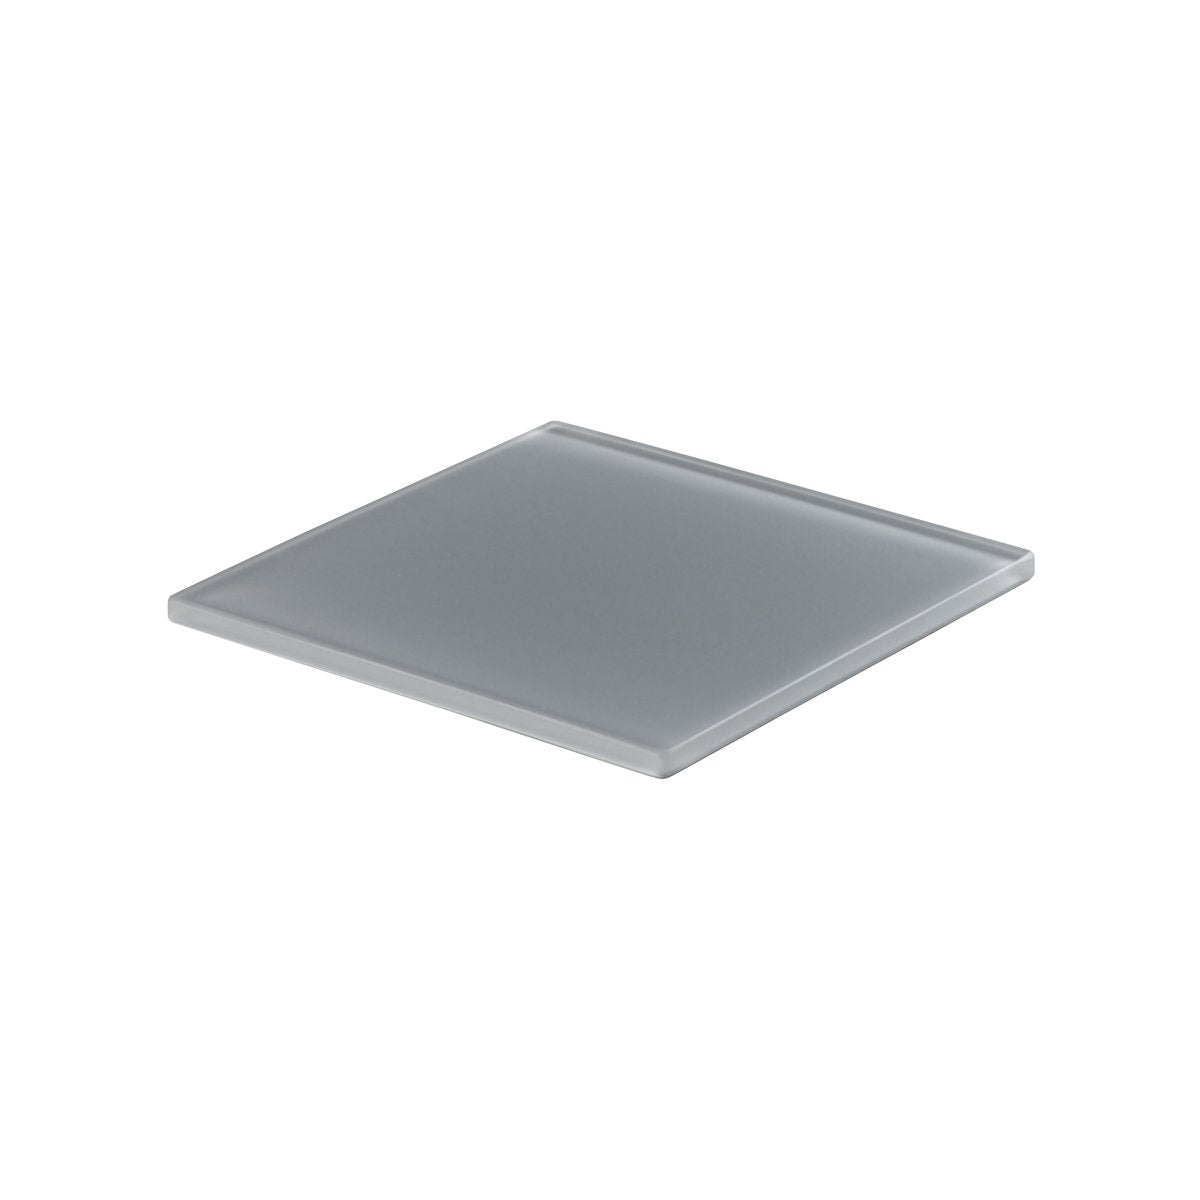 MLP110395 Mealplak Square Tray Concrete 300x300x10mm Tomkin Australia Hospitality Supplies